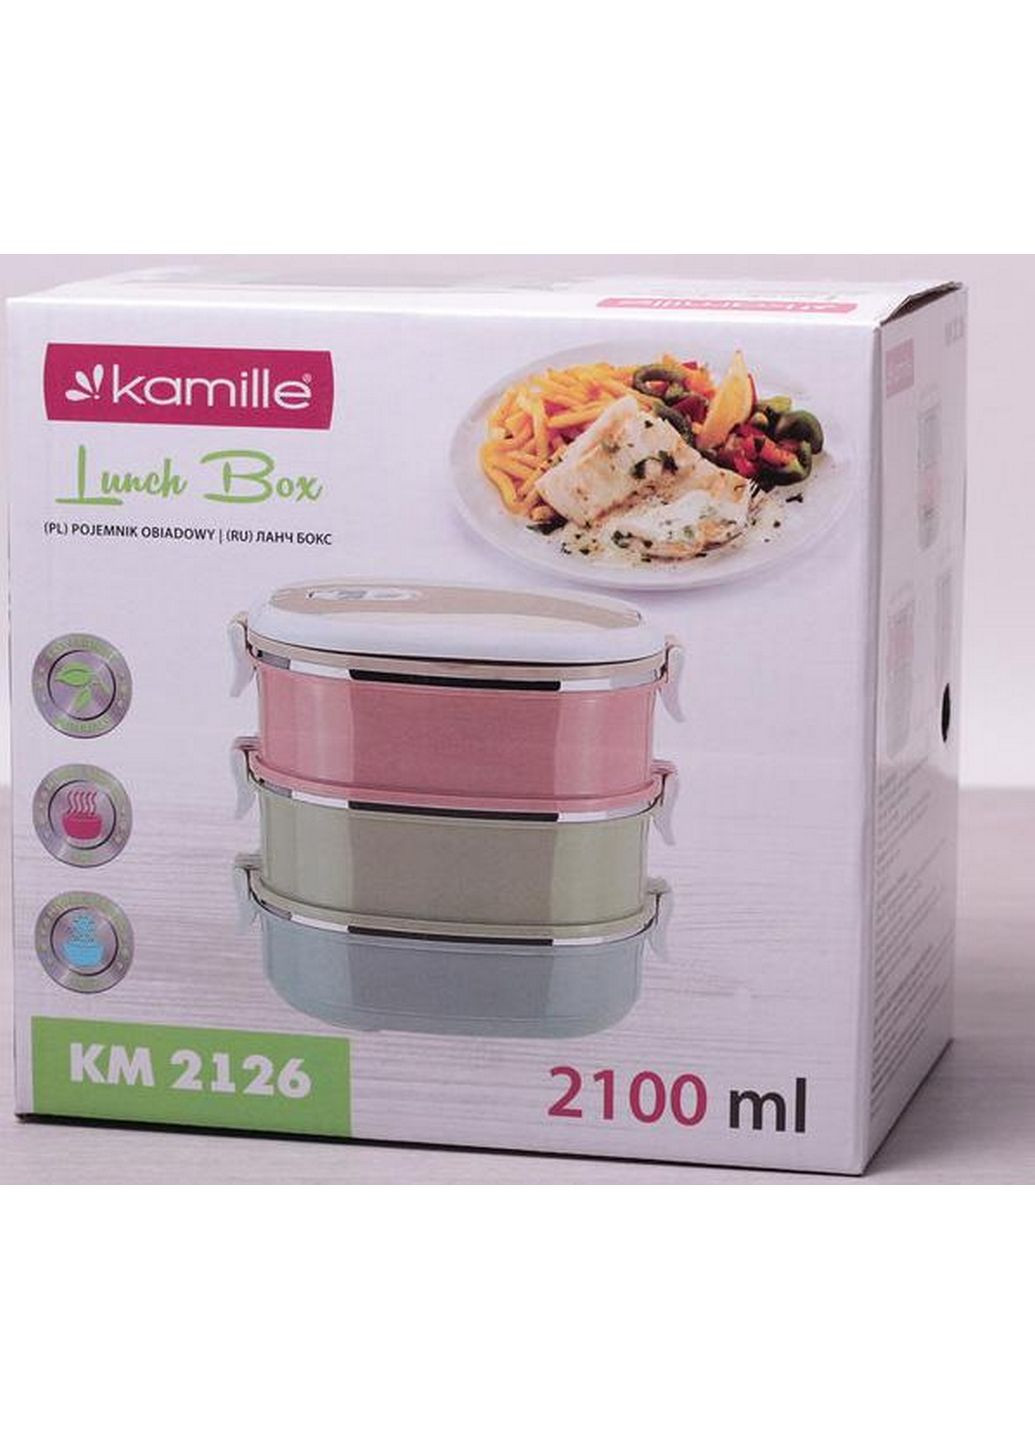 Ланч-бокс Food Box 3 емкости 20х14,5х18,5 см Kamille (289460887)